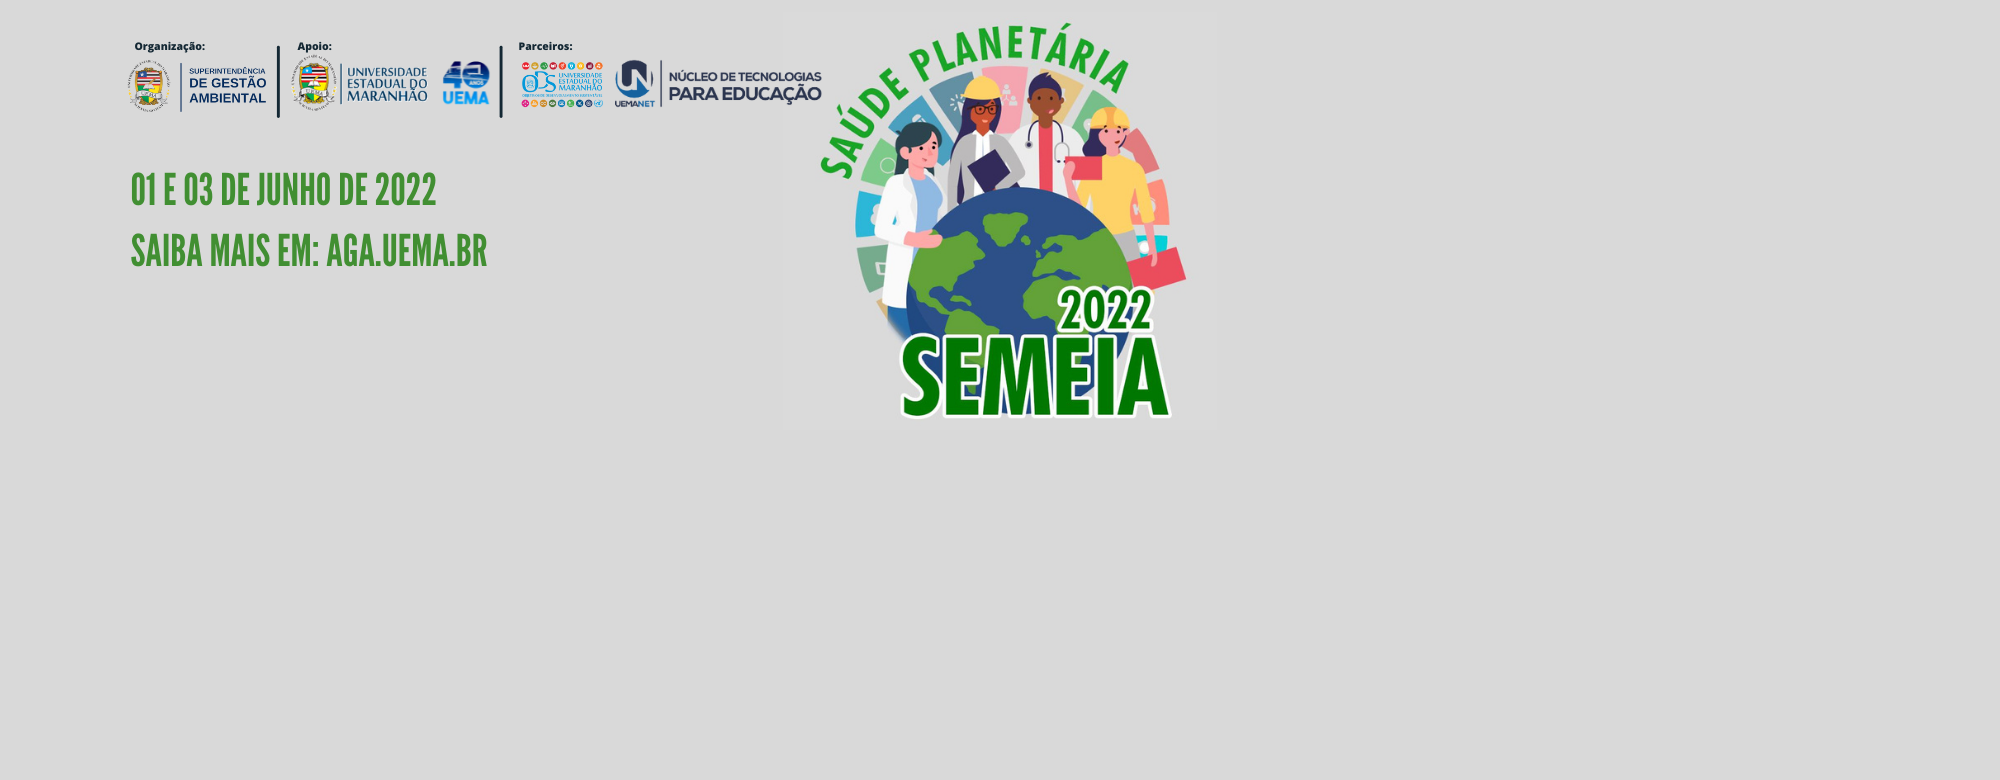 banner-topo-da-sala-virtualsemana-de-meio-ambiente-semeia-2021-3